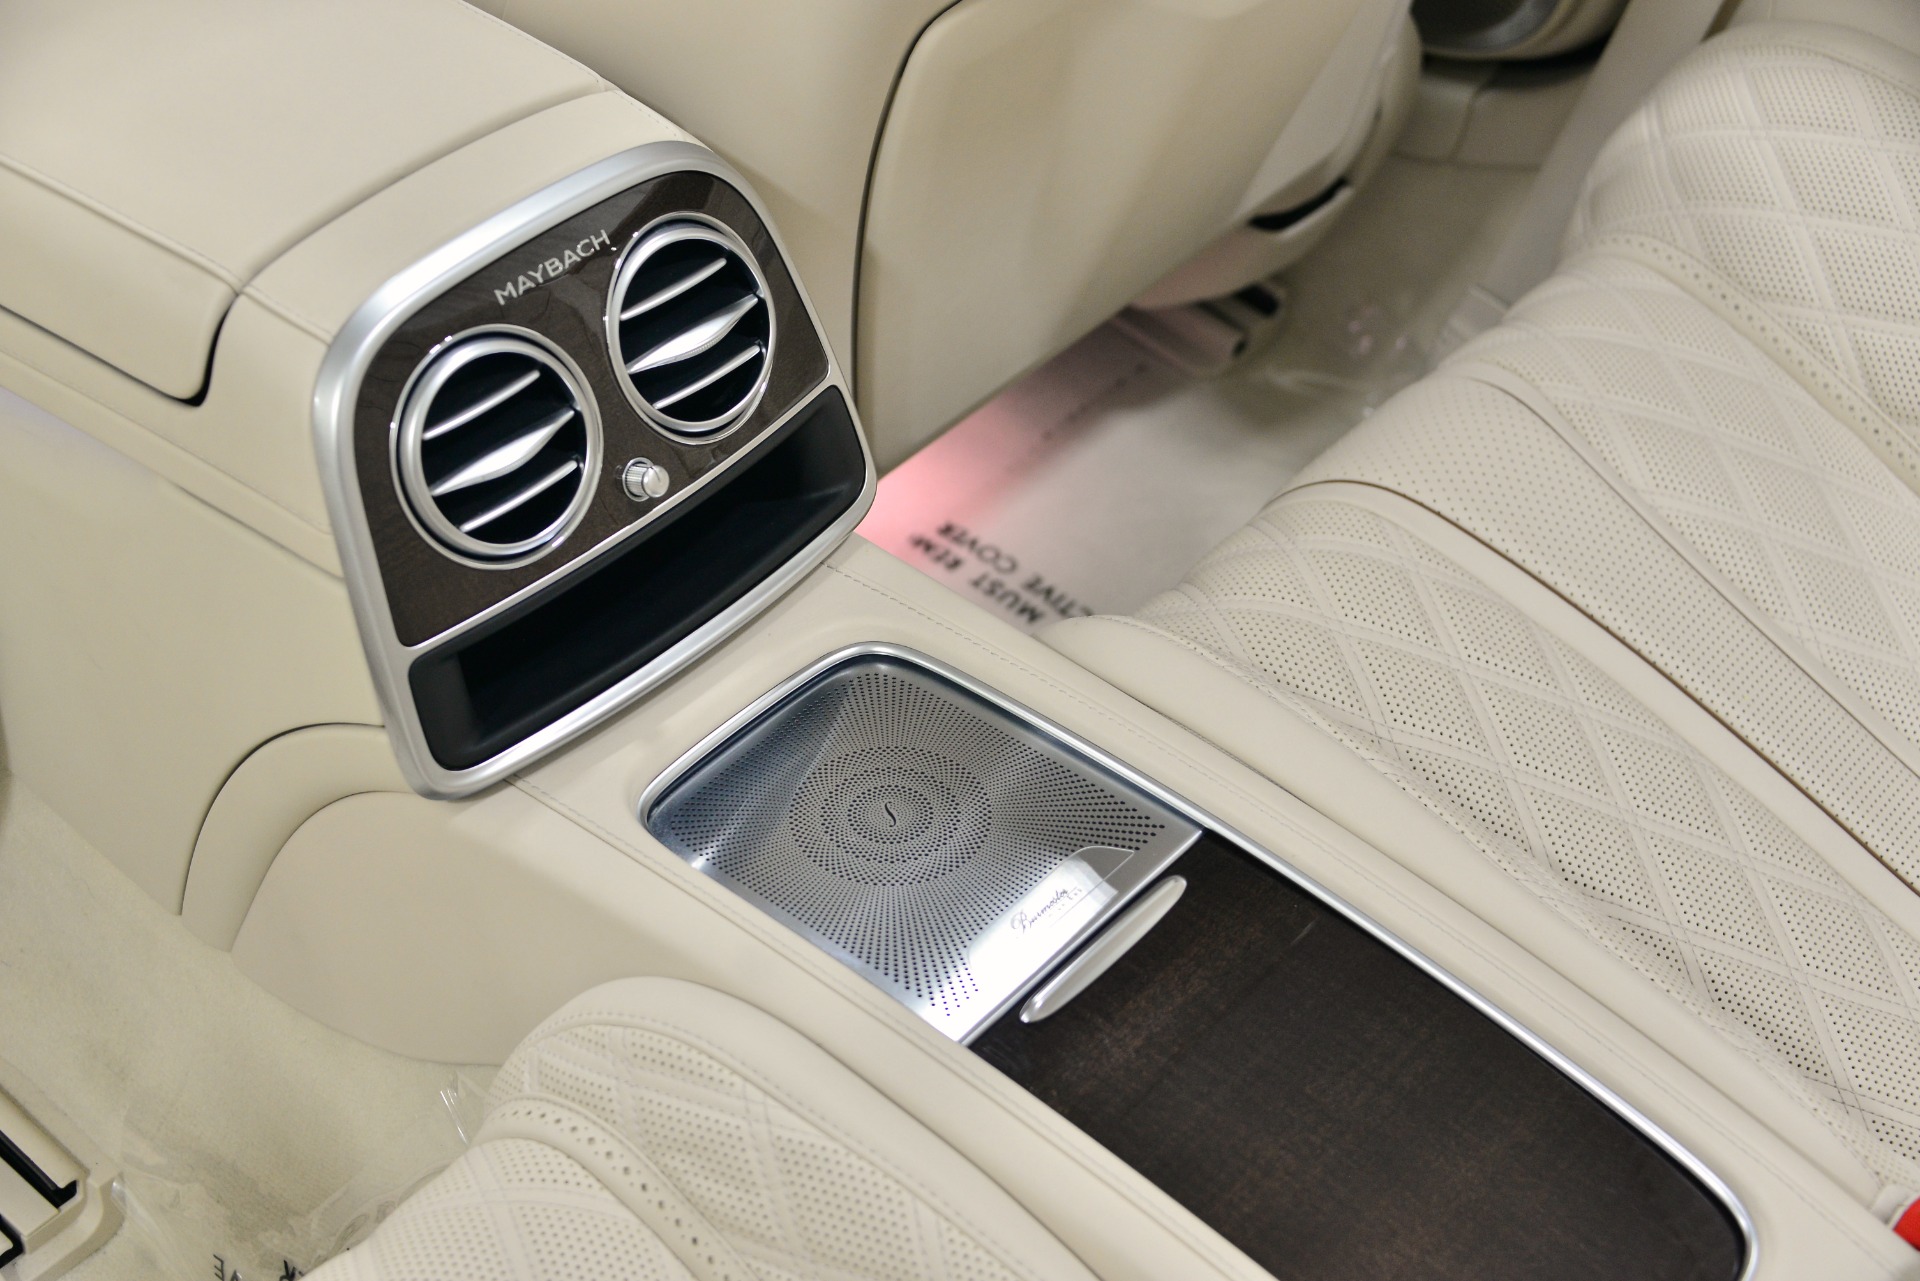 luxury designer louis vuitton car seat covers toyota rav4 2020